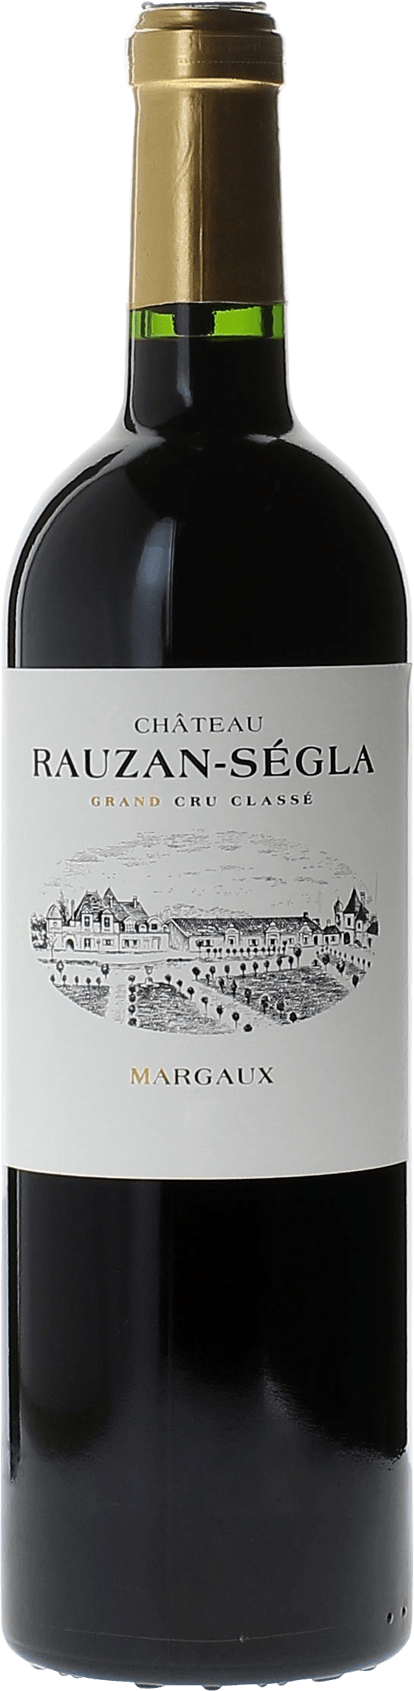 Rauzan-segla 2015 2me Grand cru class Margaux, Bordeaux rouge